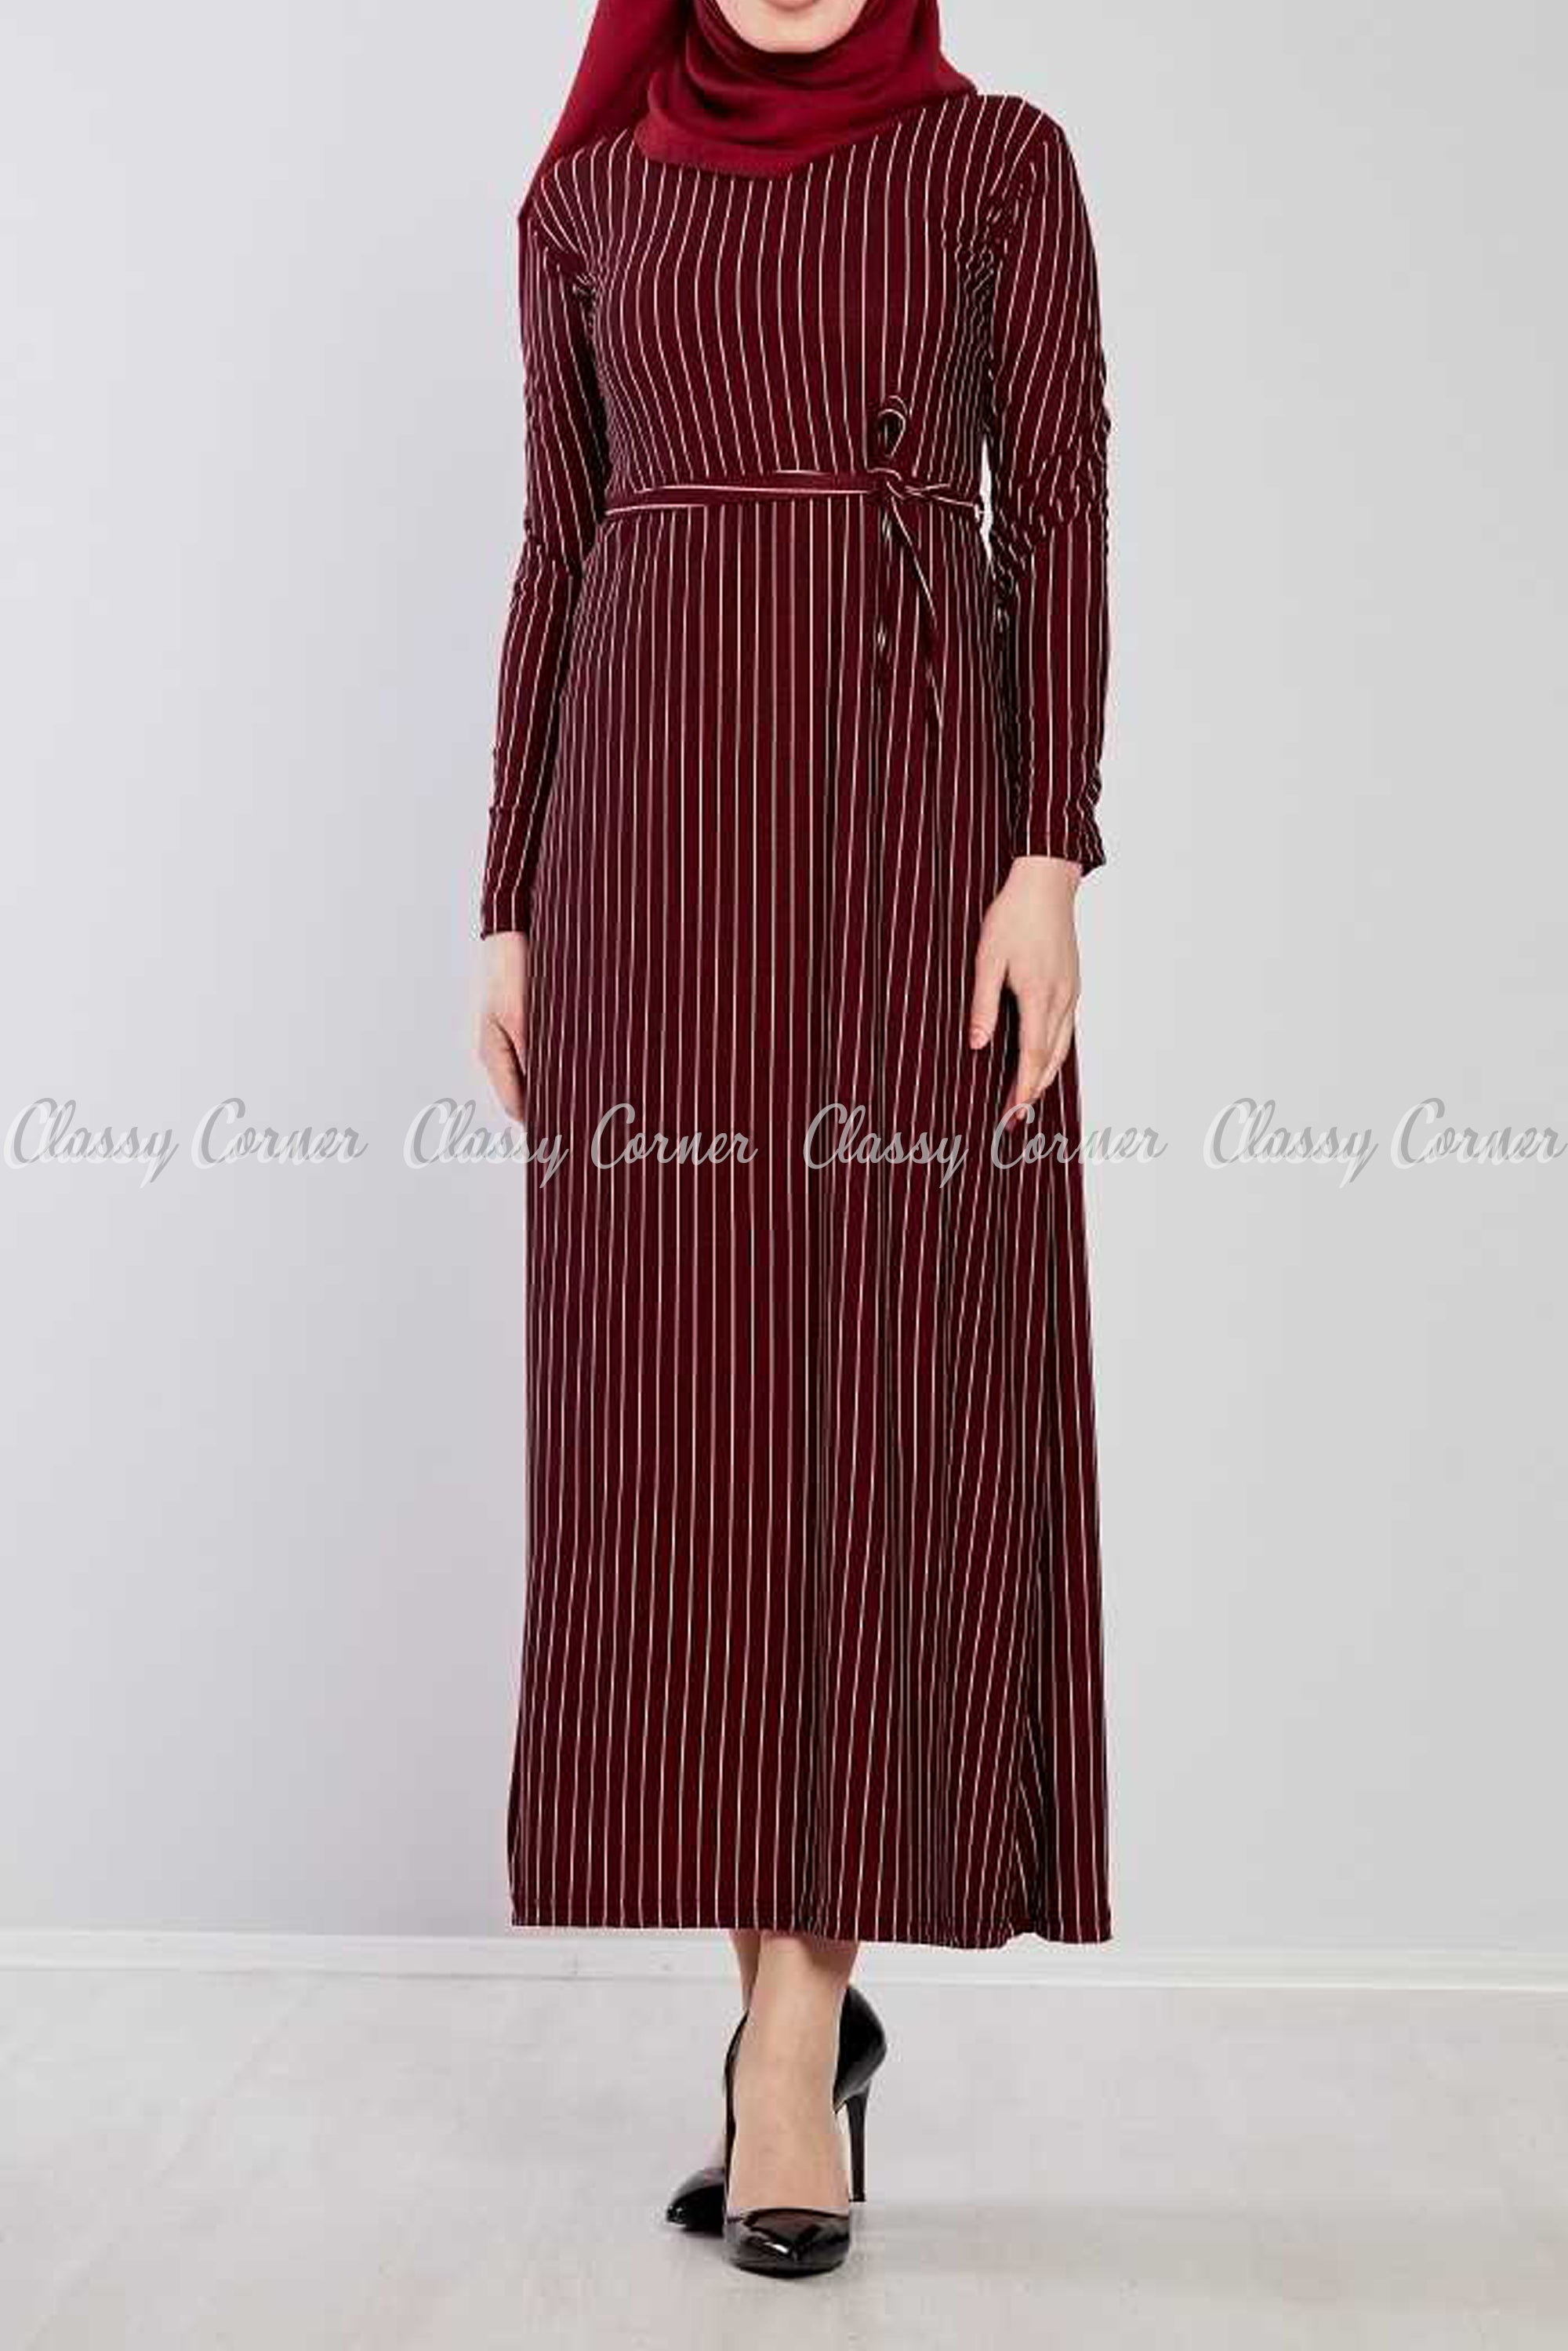 Fine Stripes Prints Red Modest Long Dress